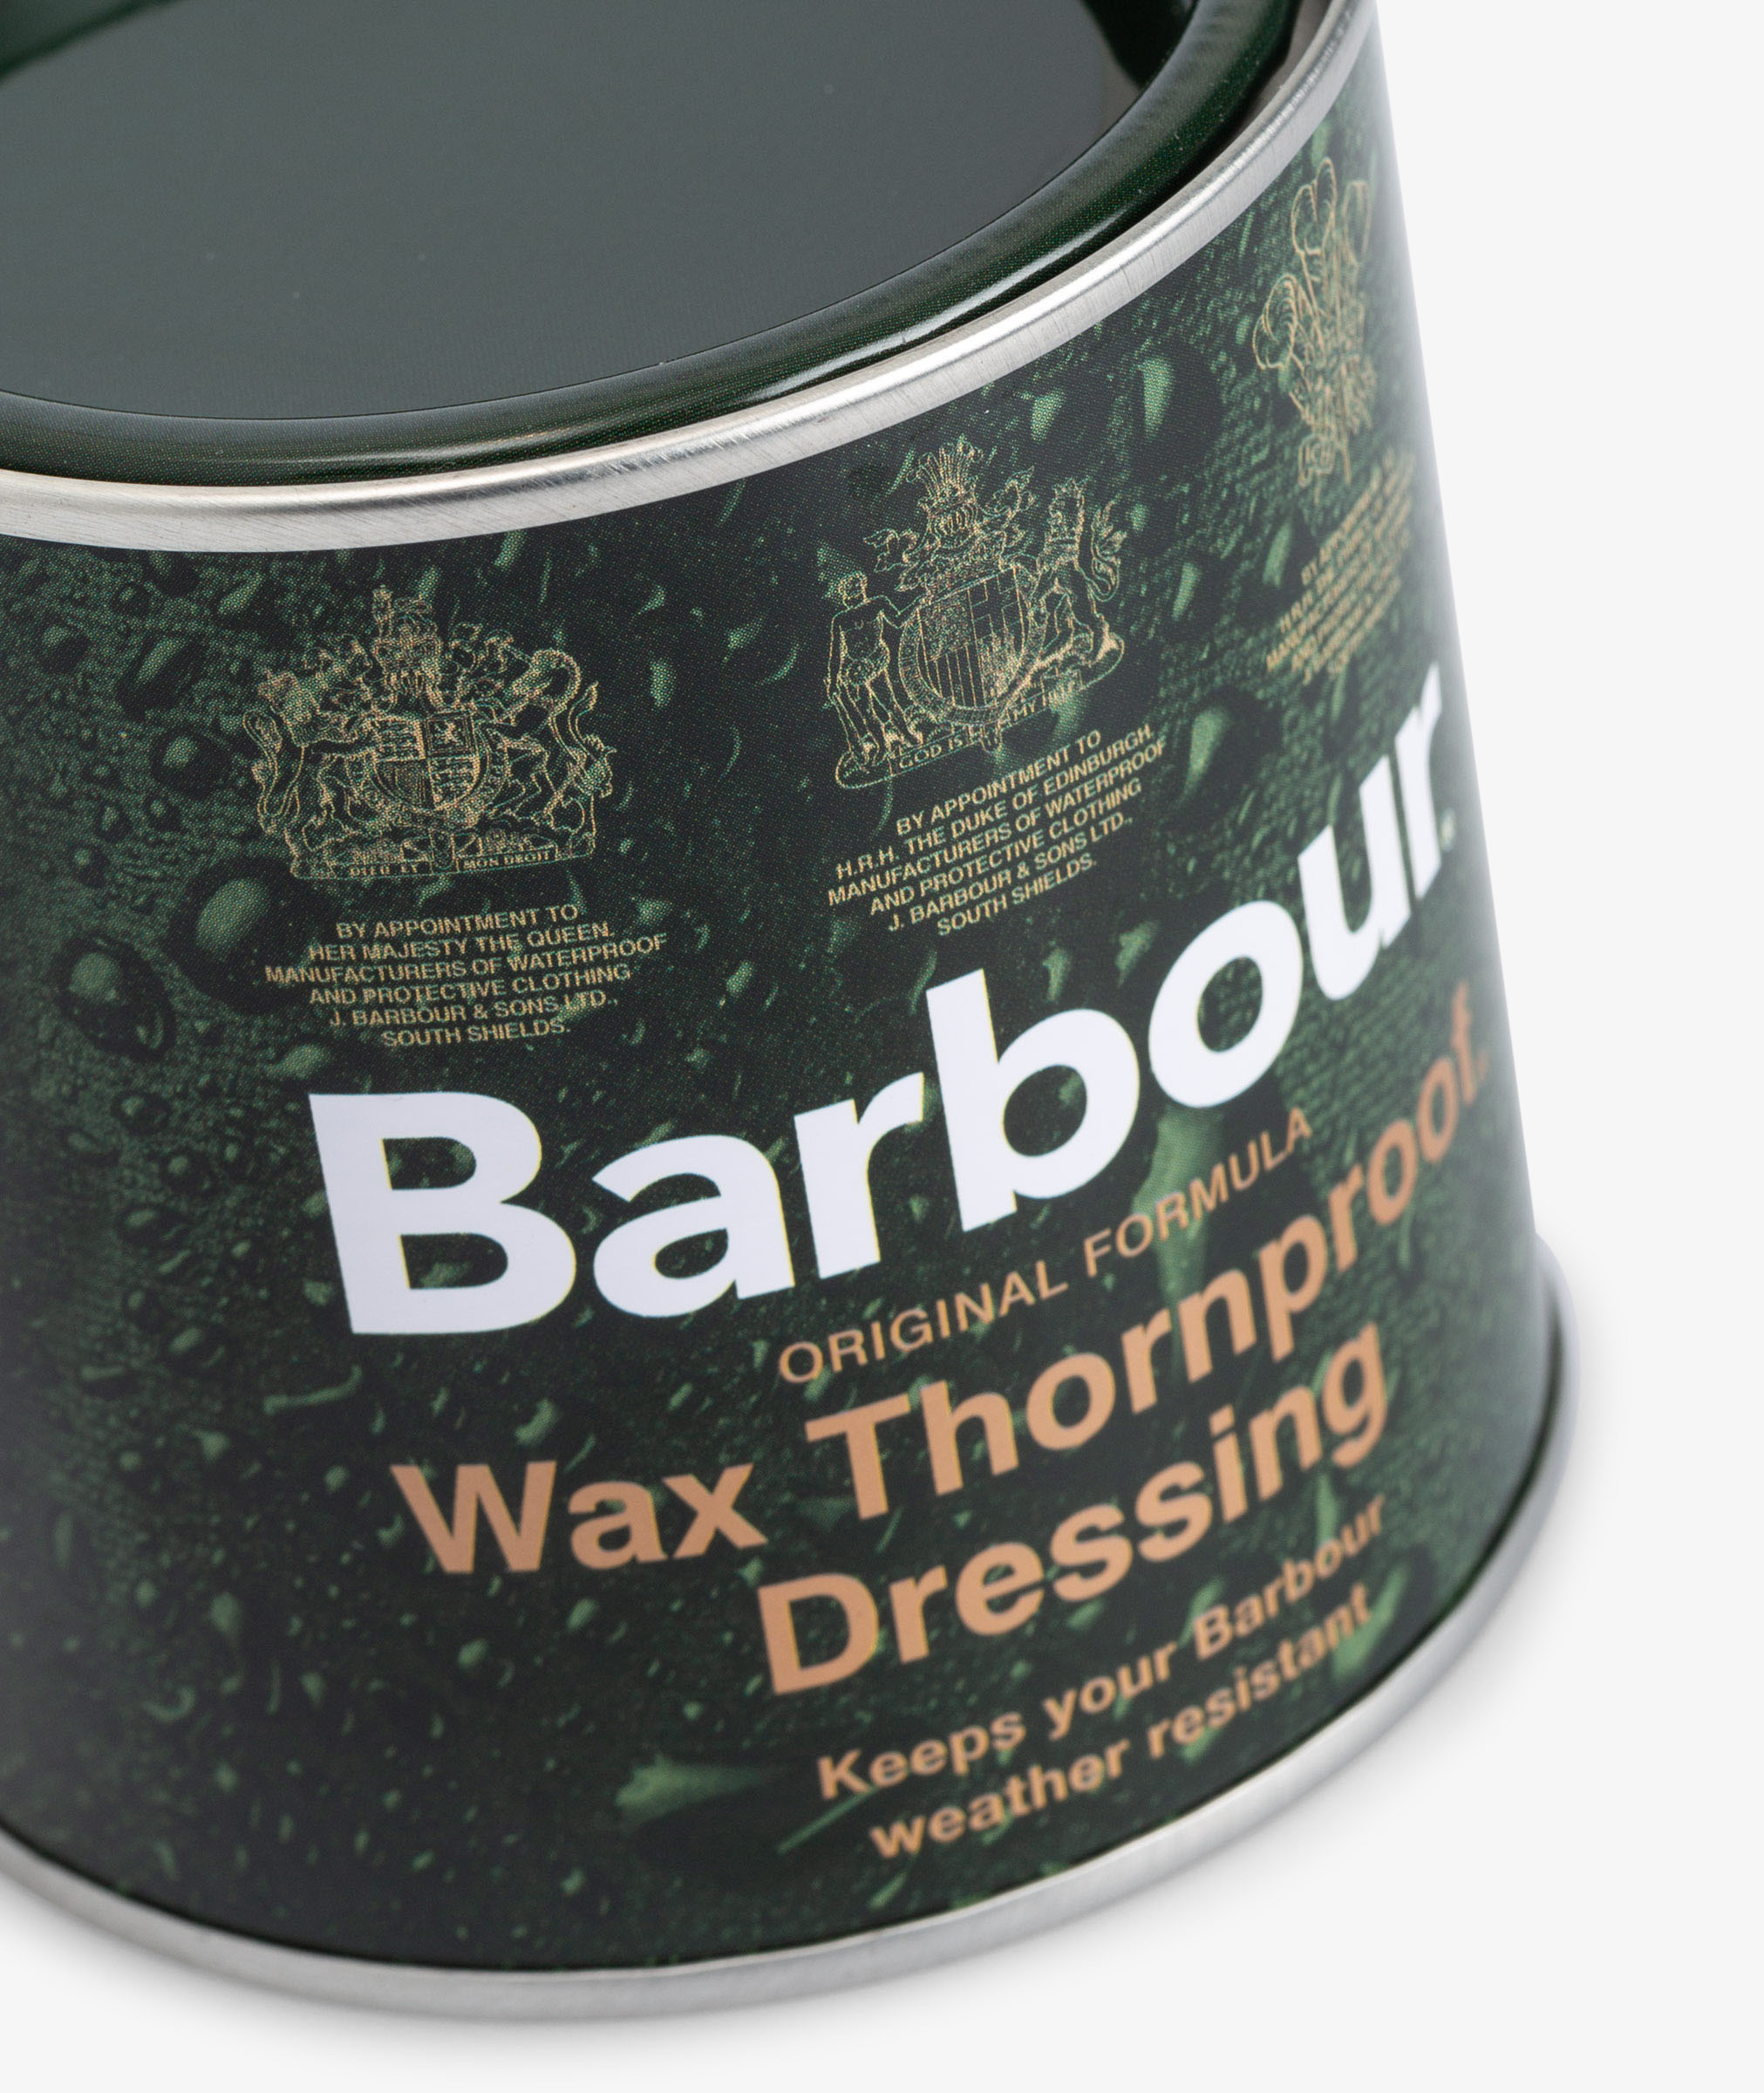 barbour thornproof dressing ingredients